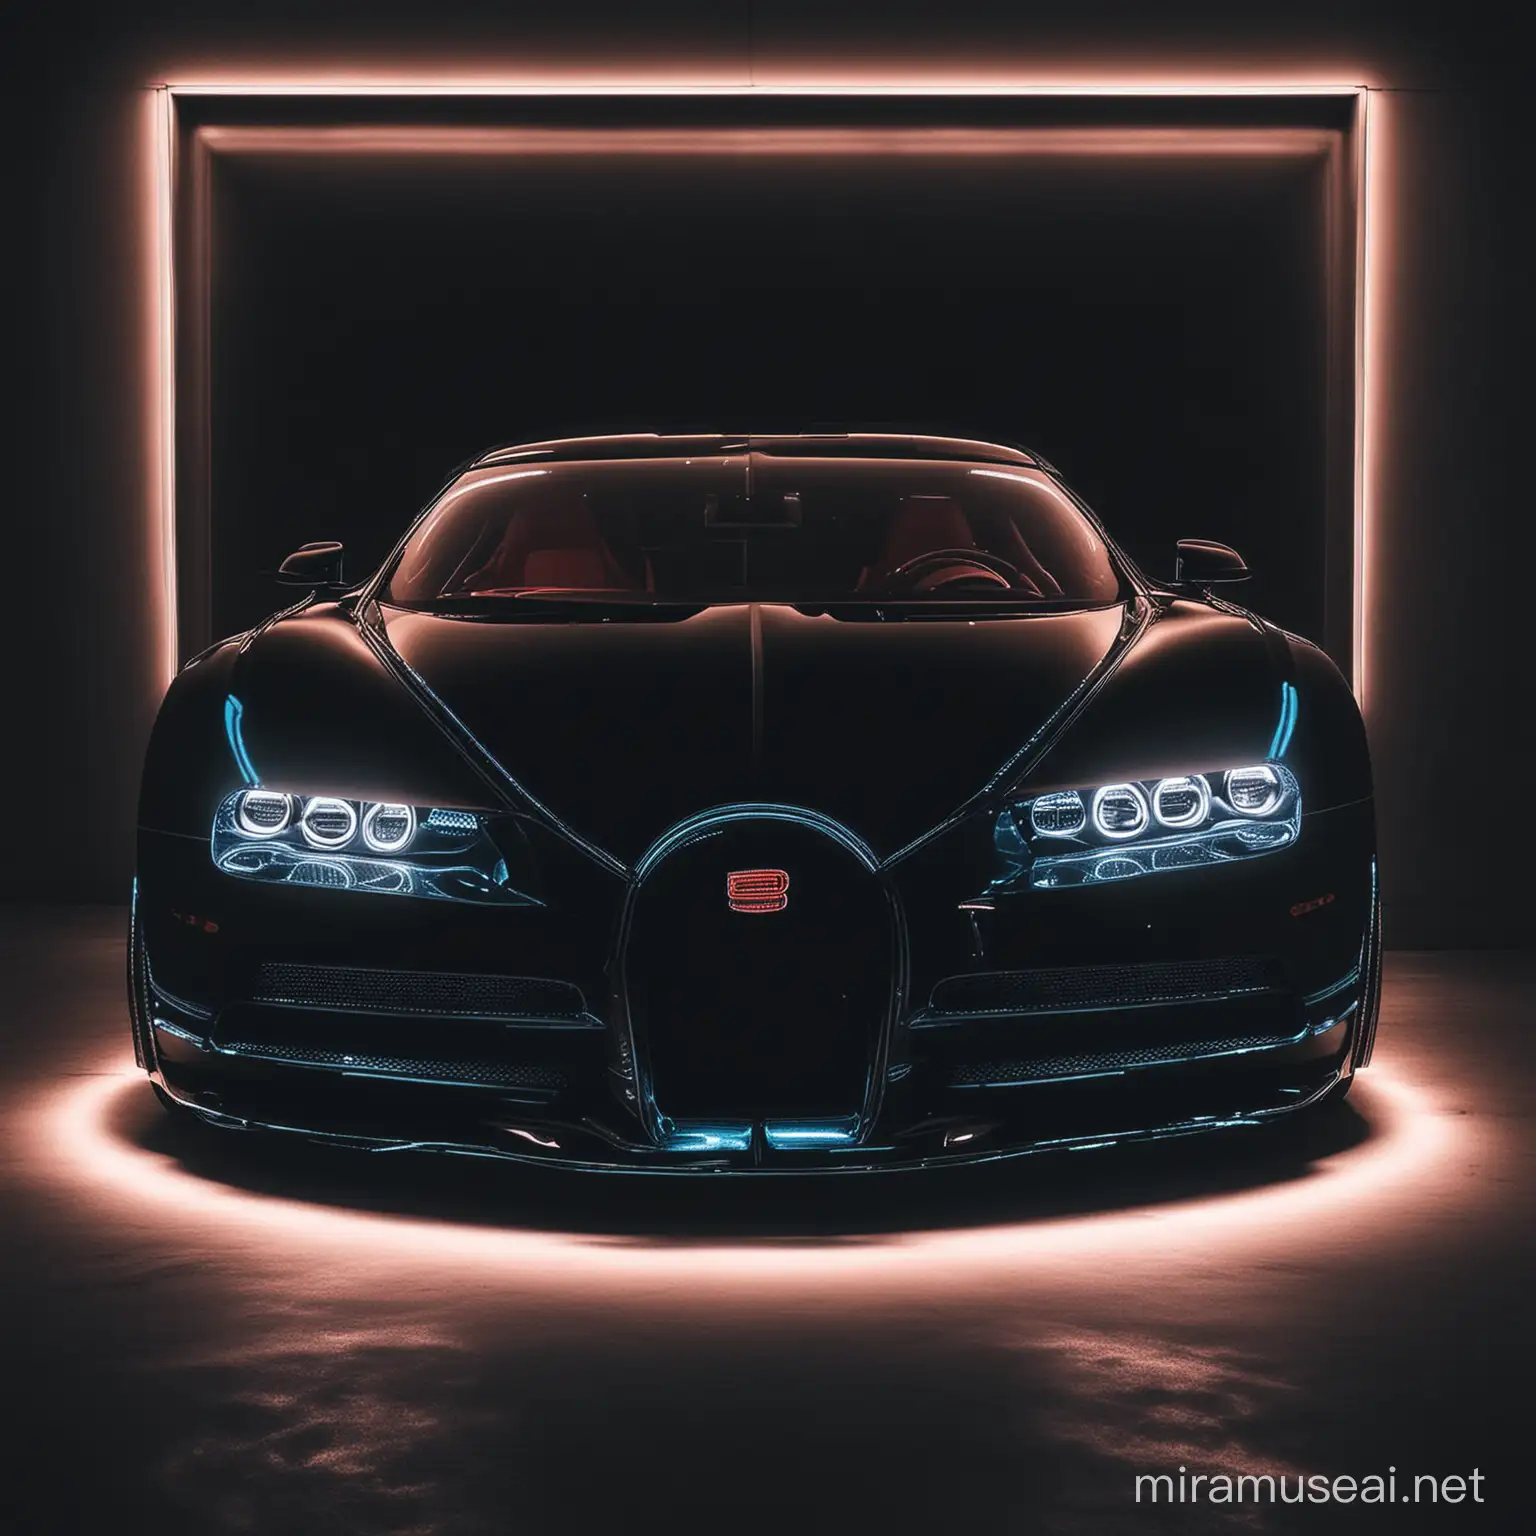 Sleek Black Bugatti with Vibrant Neon Lights